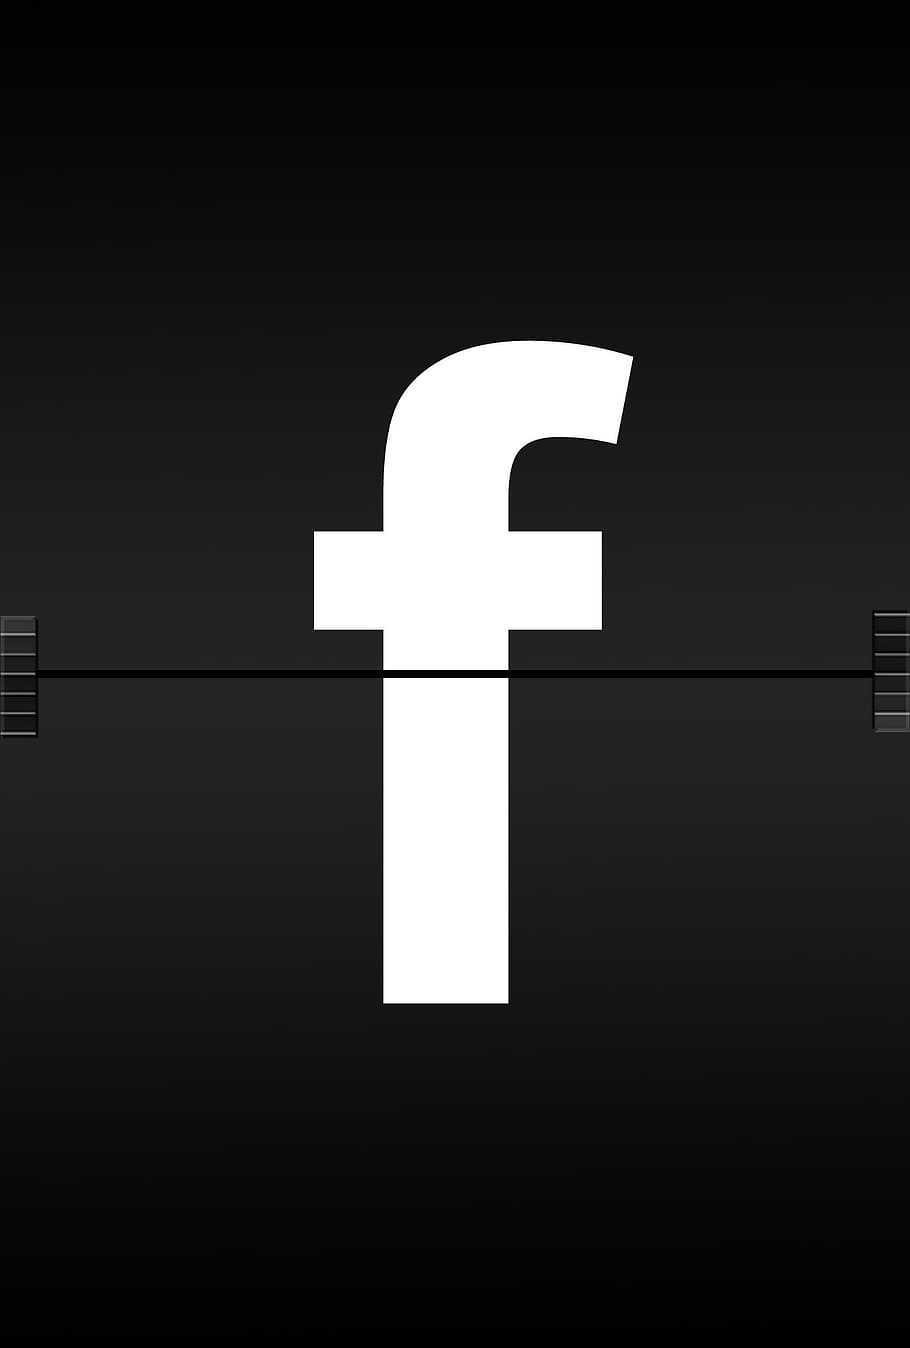 facebook logo, letters, abc, alphabet, journal font, airport, scoreboard, ad, railway station, board